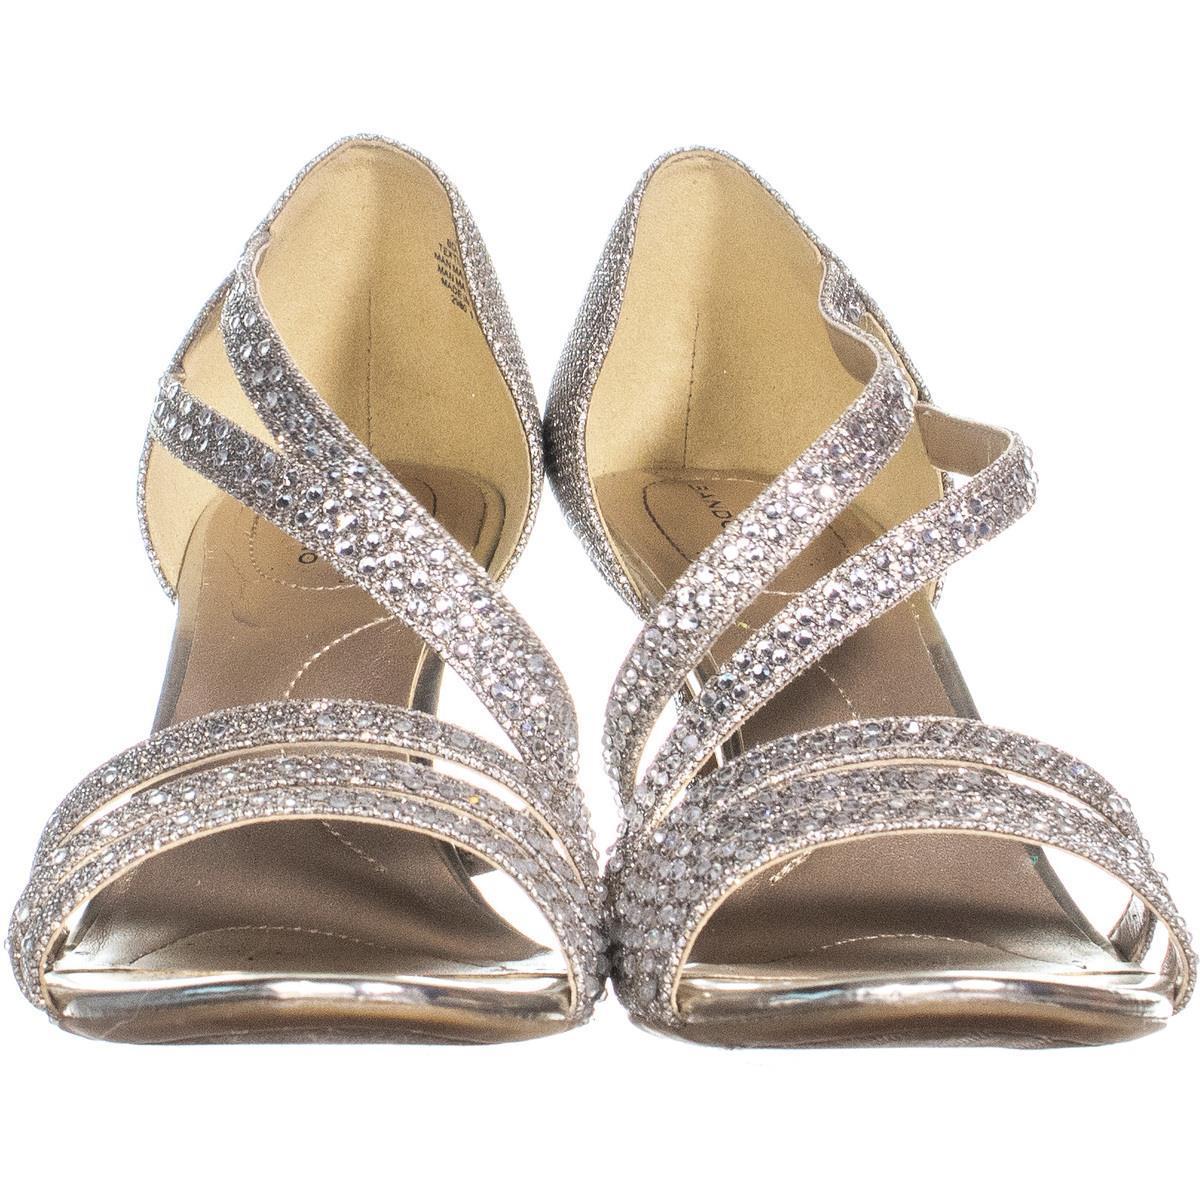 Bandolino Meggie Strappy Evening Sandals 245, Gold, 8 US - Sandals ...